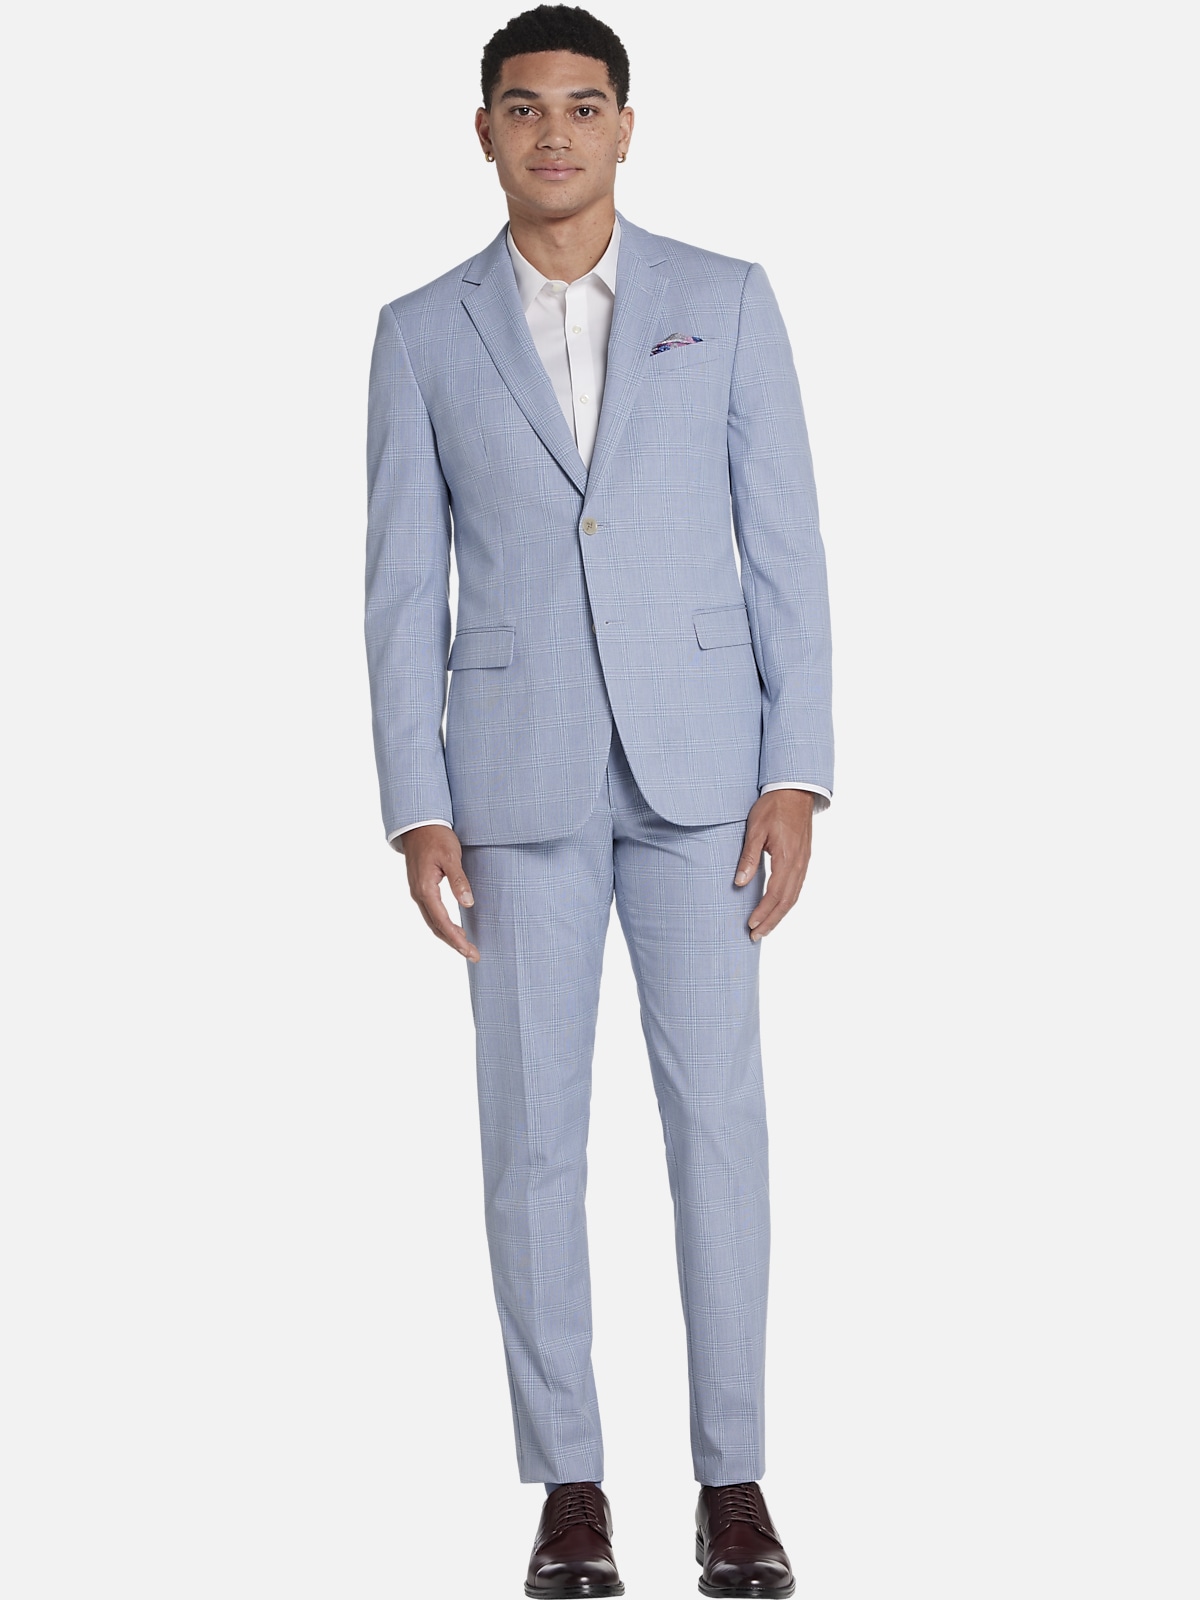 Egara Skinny Fit Plaid Suit Separates Jacket | All Clearance $39.99 ...